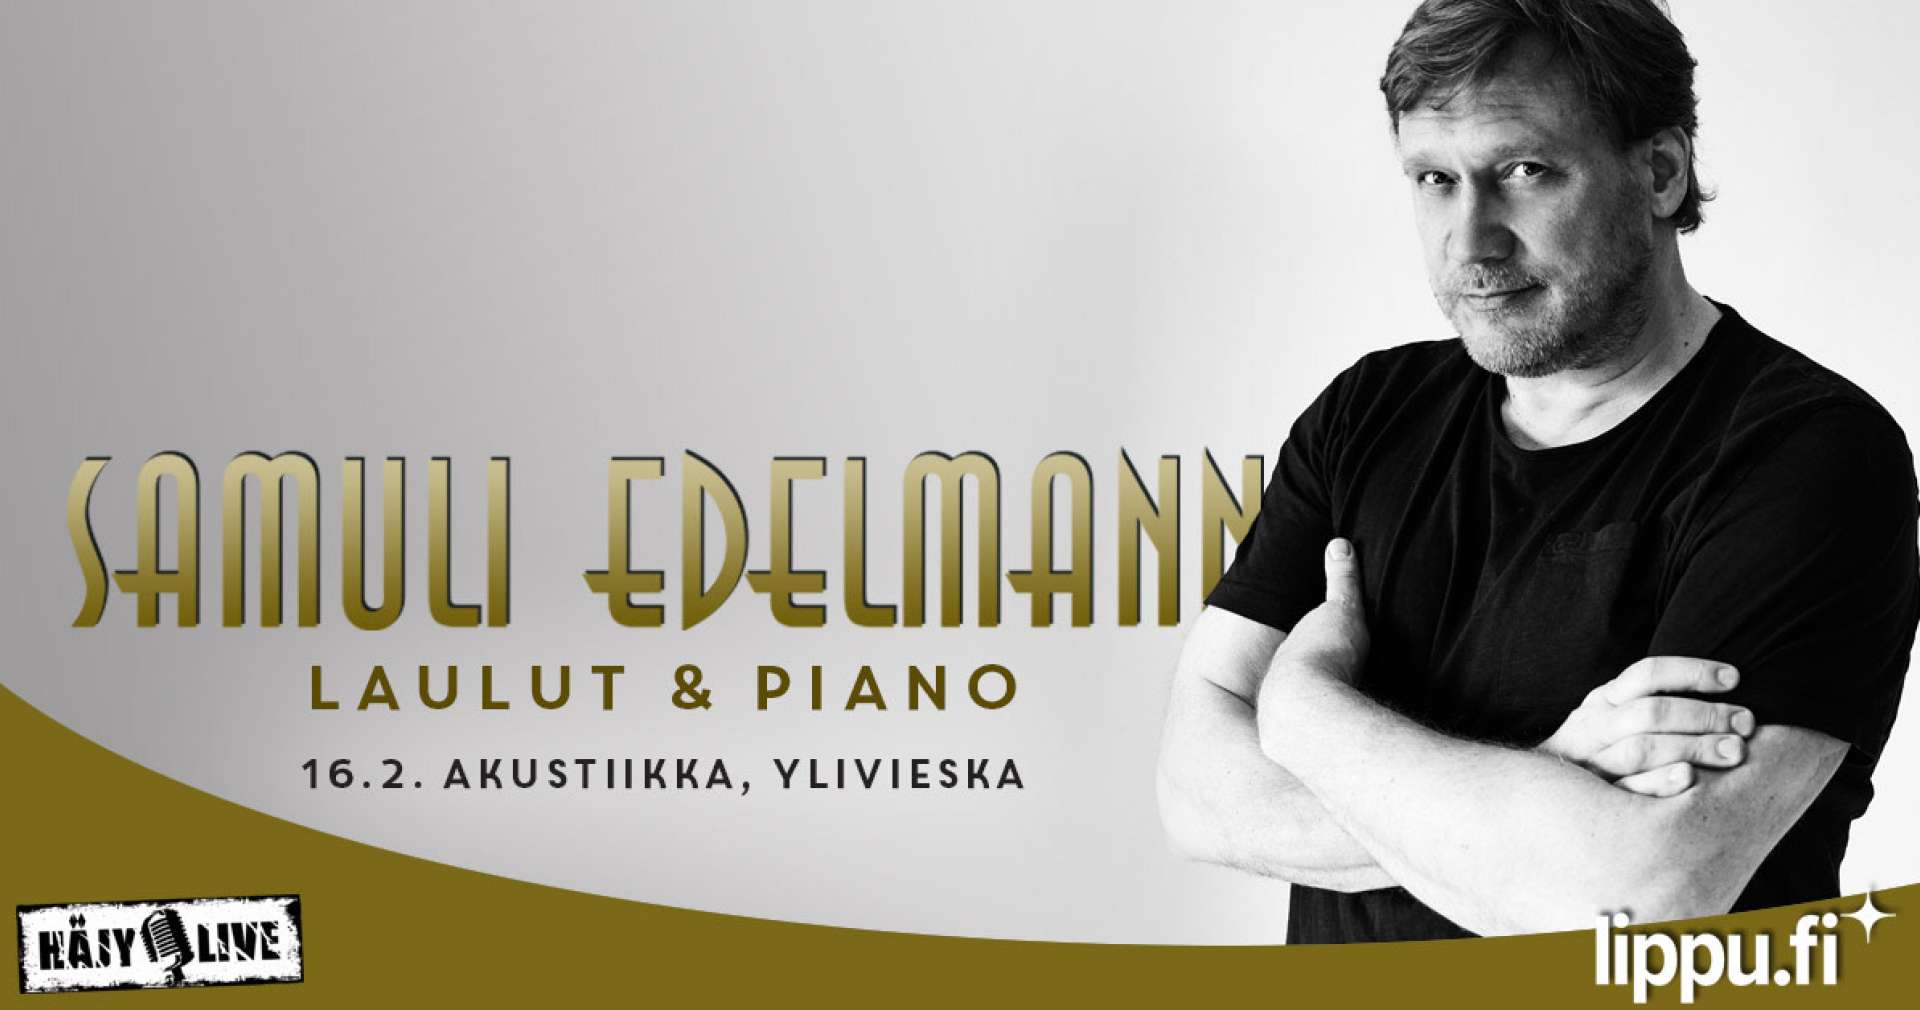 Samuli Edelmann: Laulut & Piano